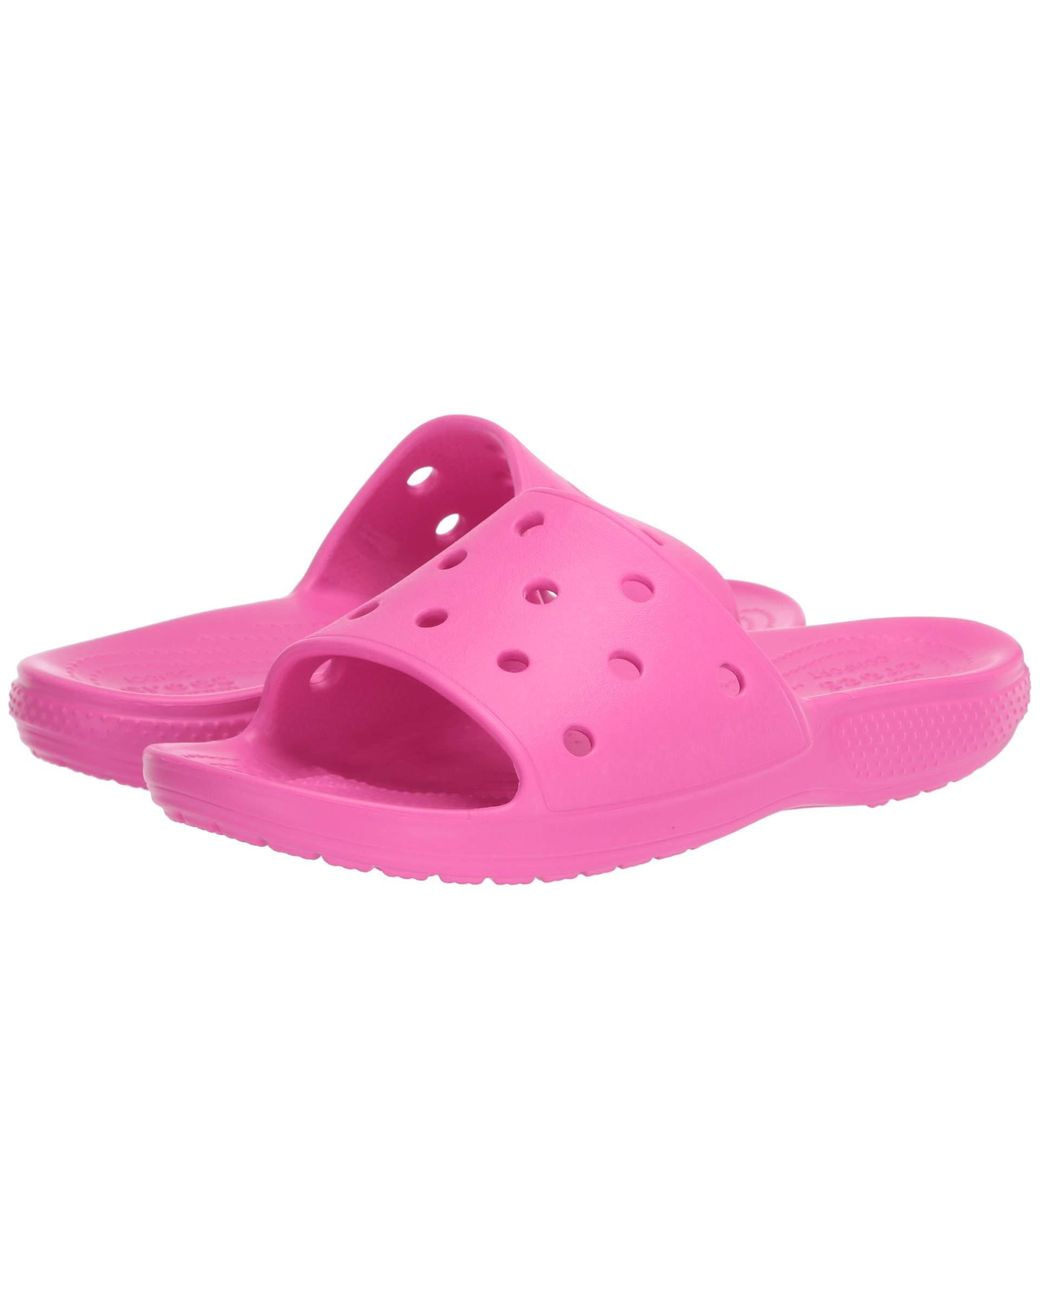 Crocs™ Classic Slide in Fuchsia (Pink) - Lyst